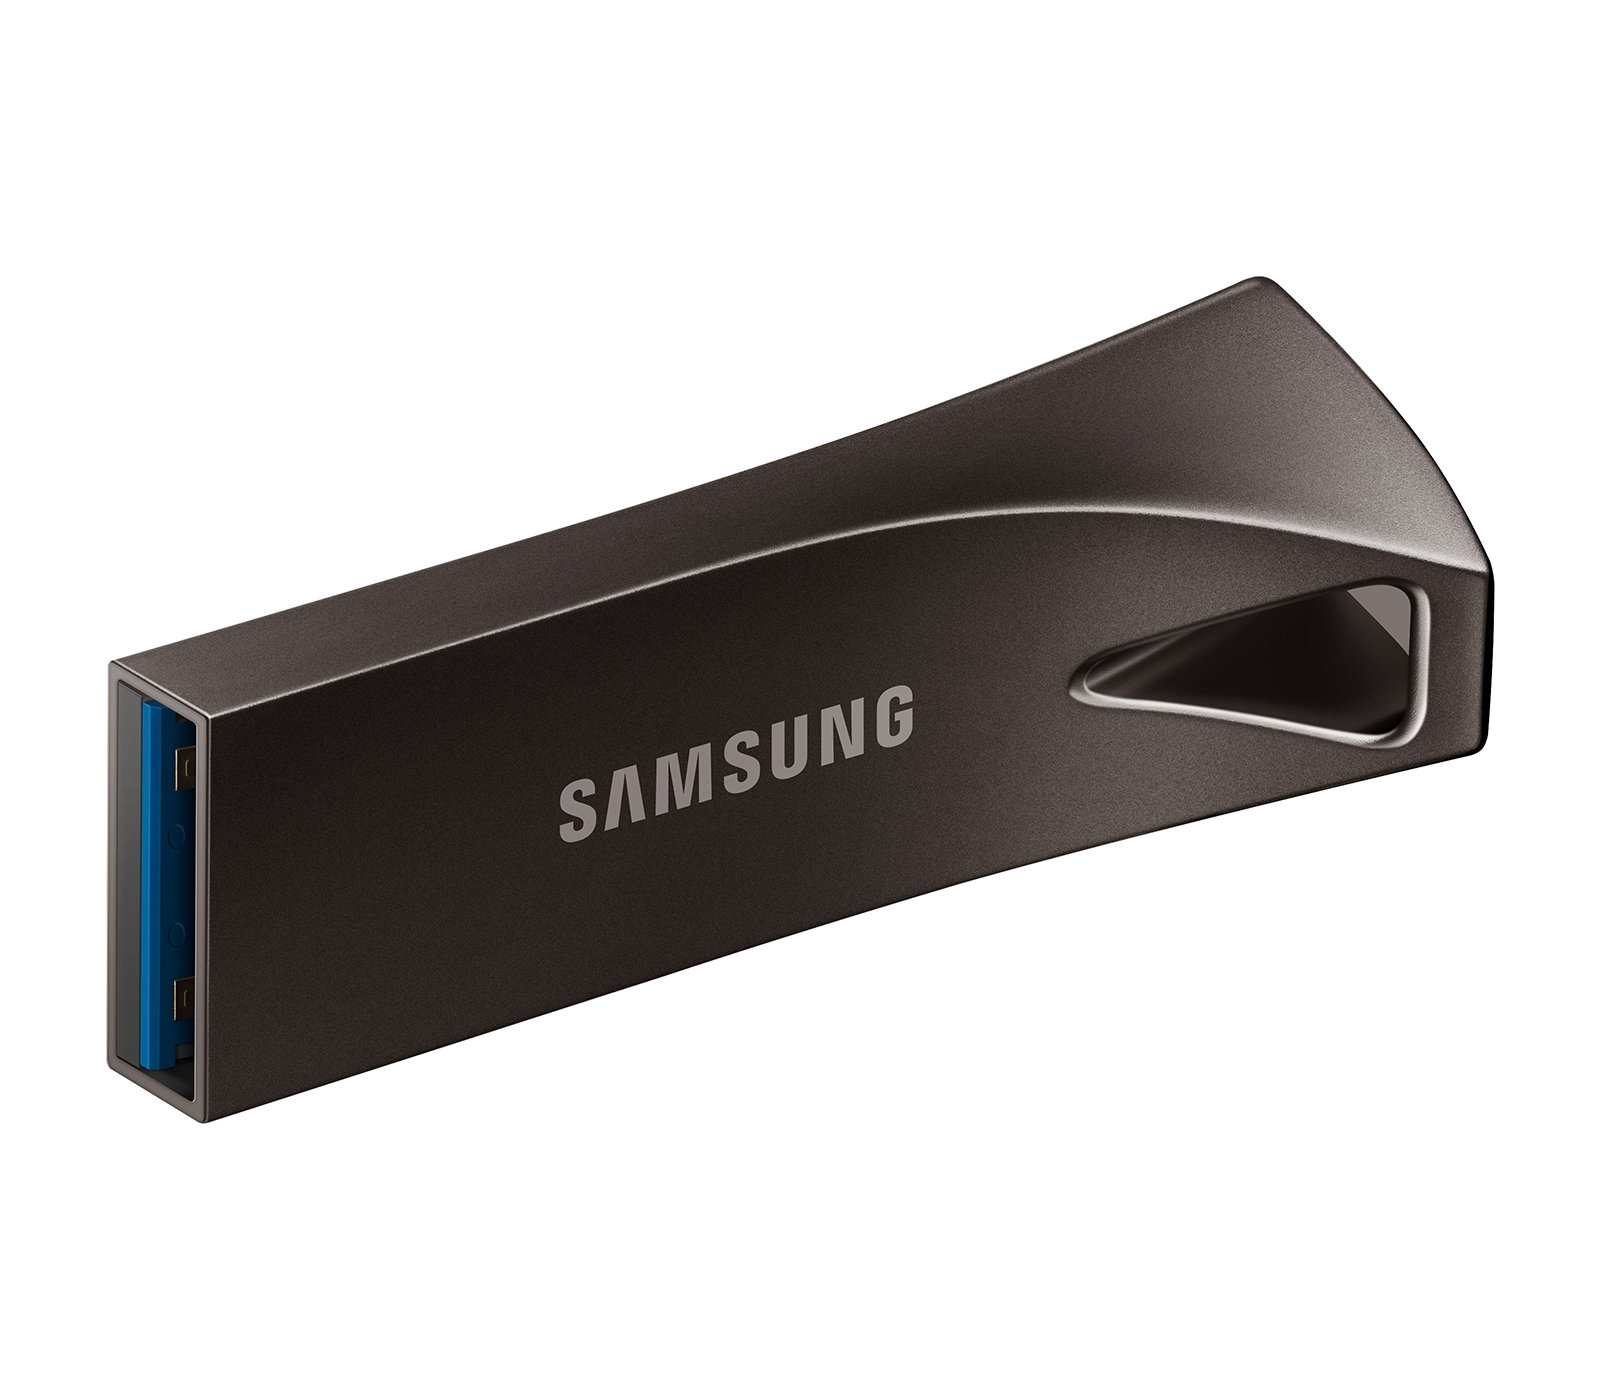 Samsung MUF-64BE4/AM Bar Plus USB 3.1 Flash Drive 64GB Titan Grey